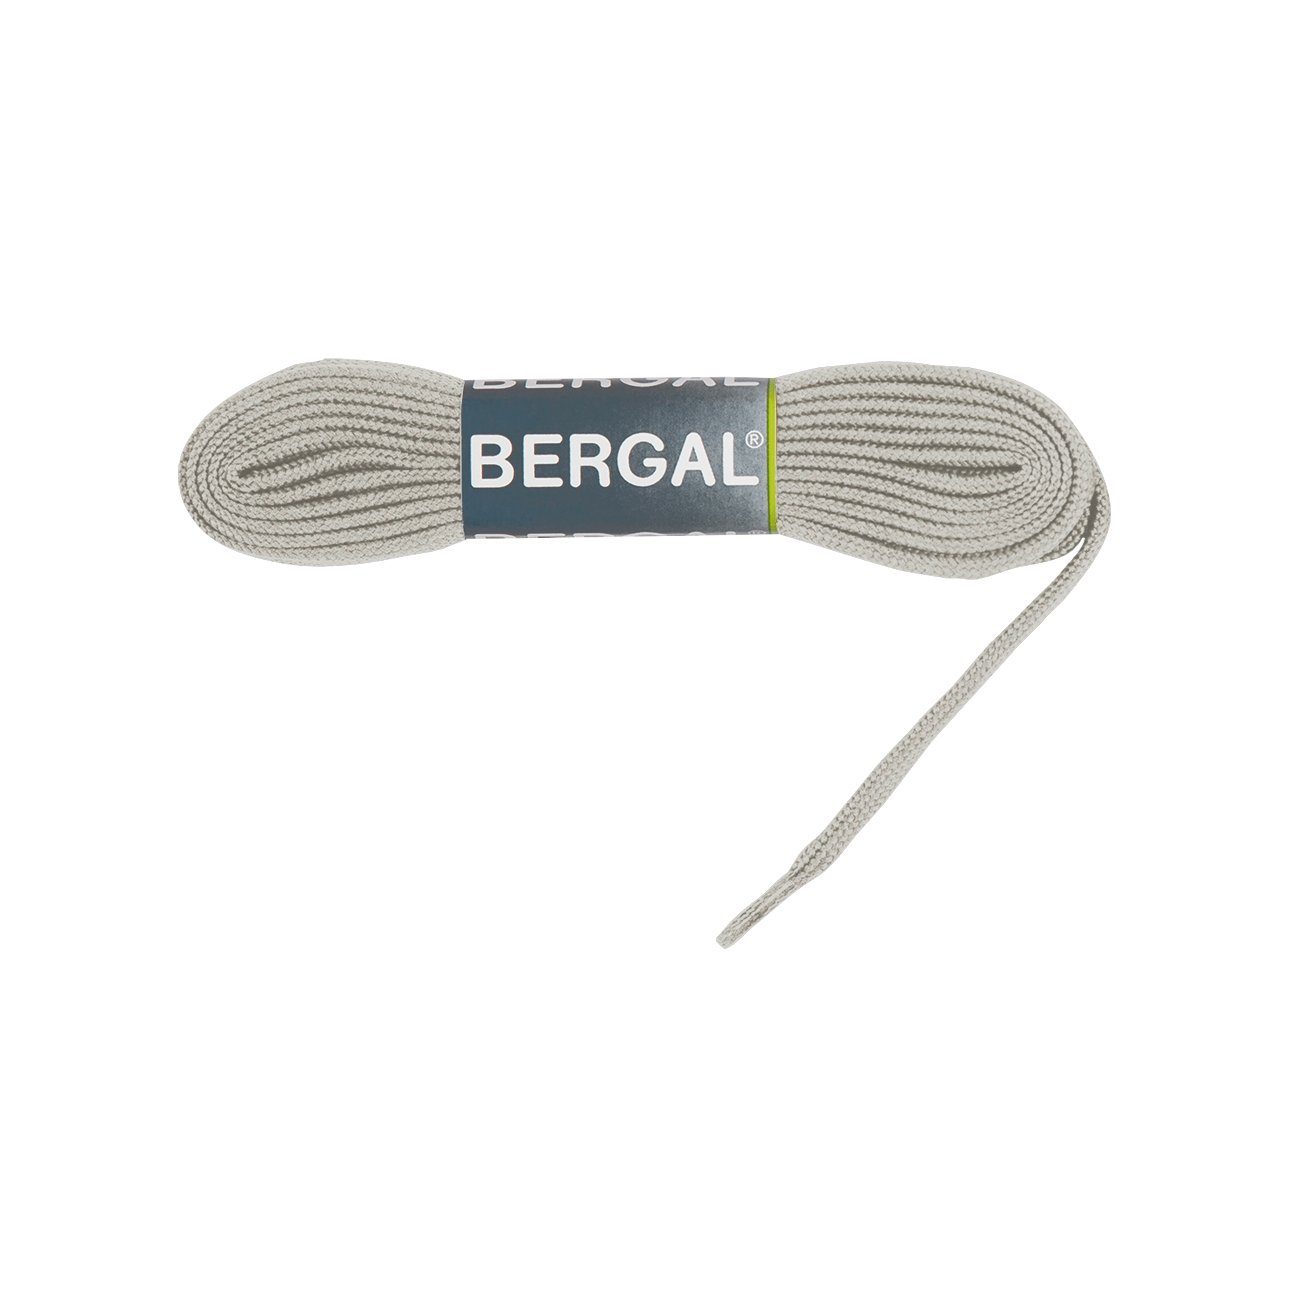 Bergal Schnürsenkel Sneaker Laces - Flach - 10 mm Breit Hellgrau